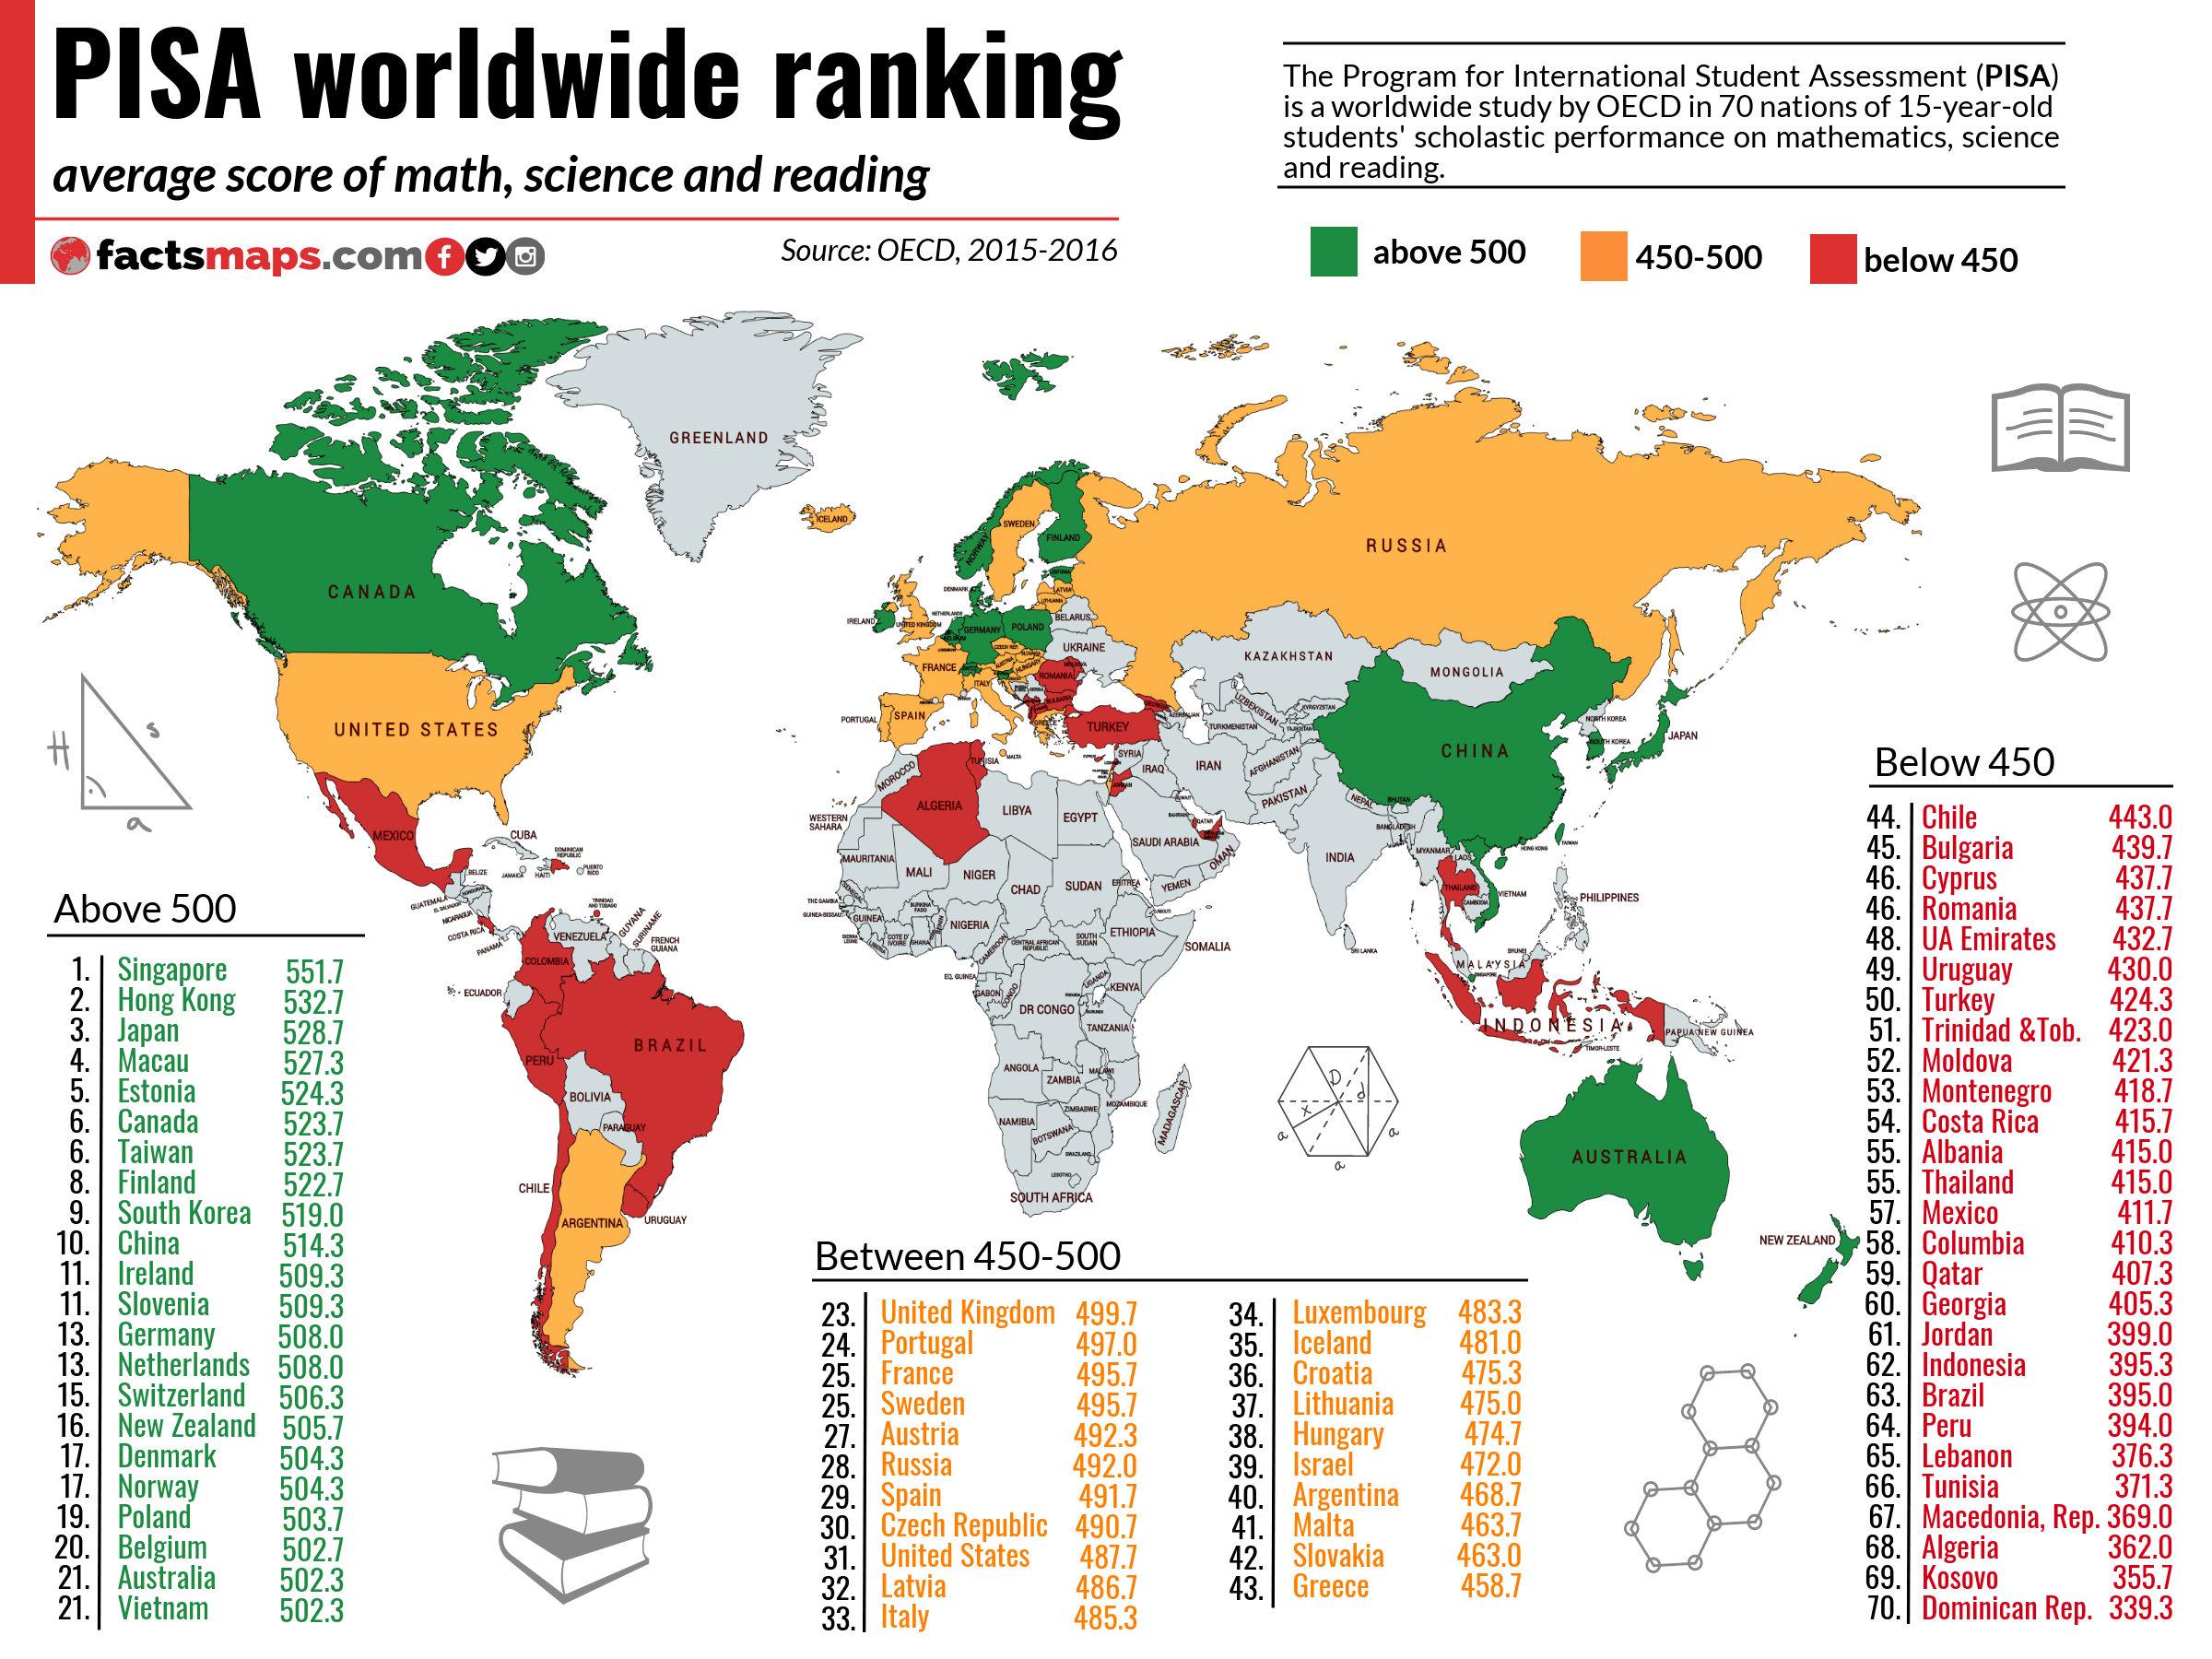 PISA-worldwide-ranking-average-score-of-mathematics-science-reading.png